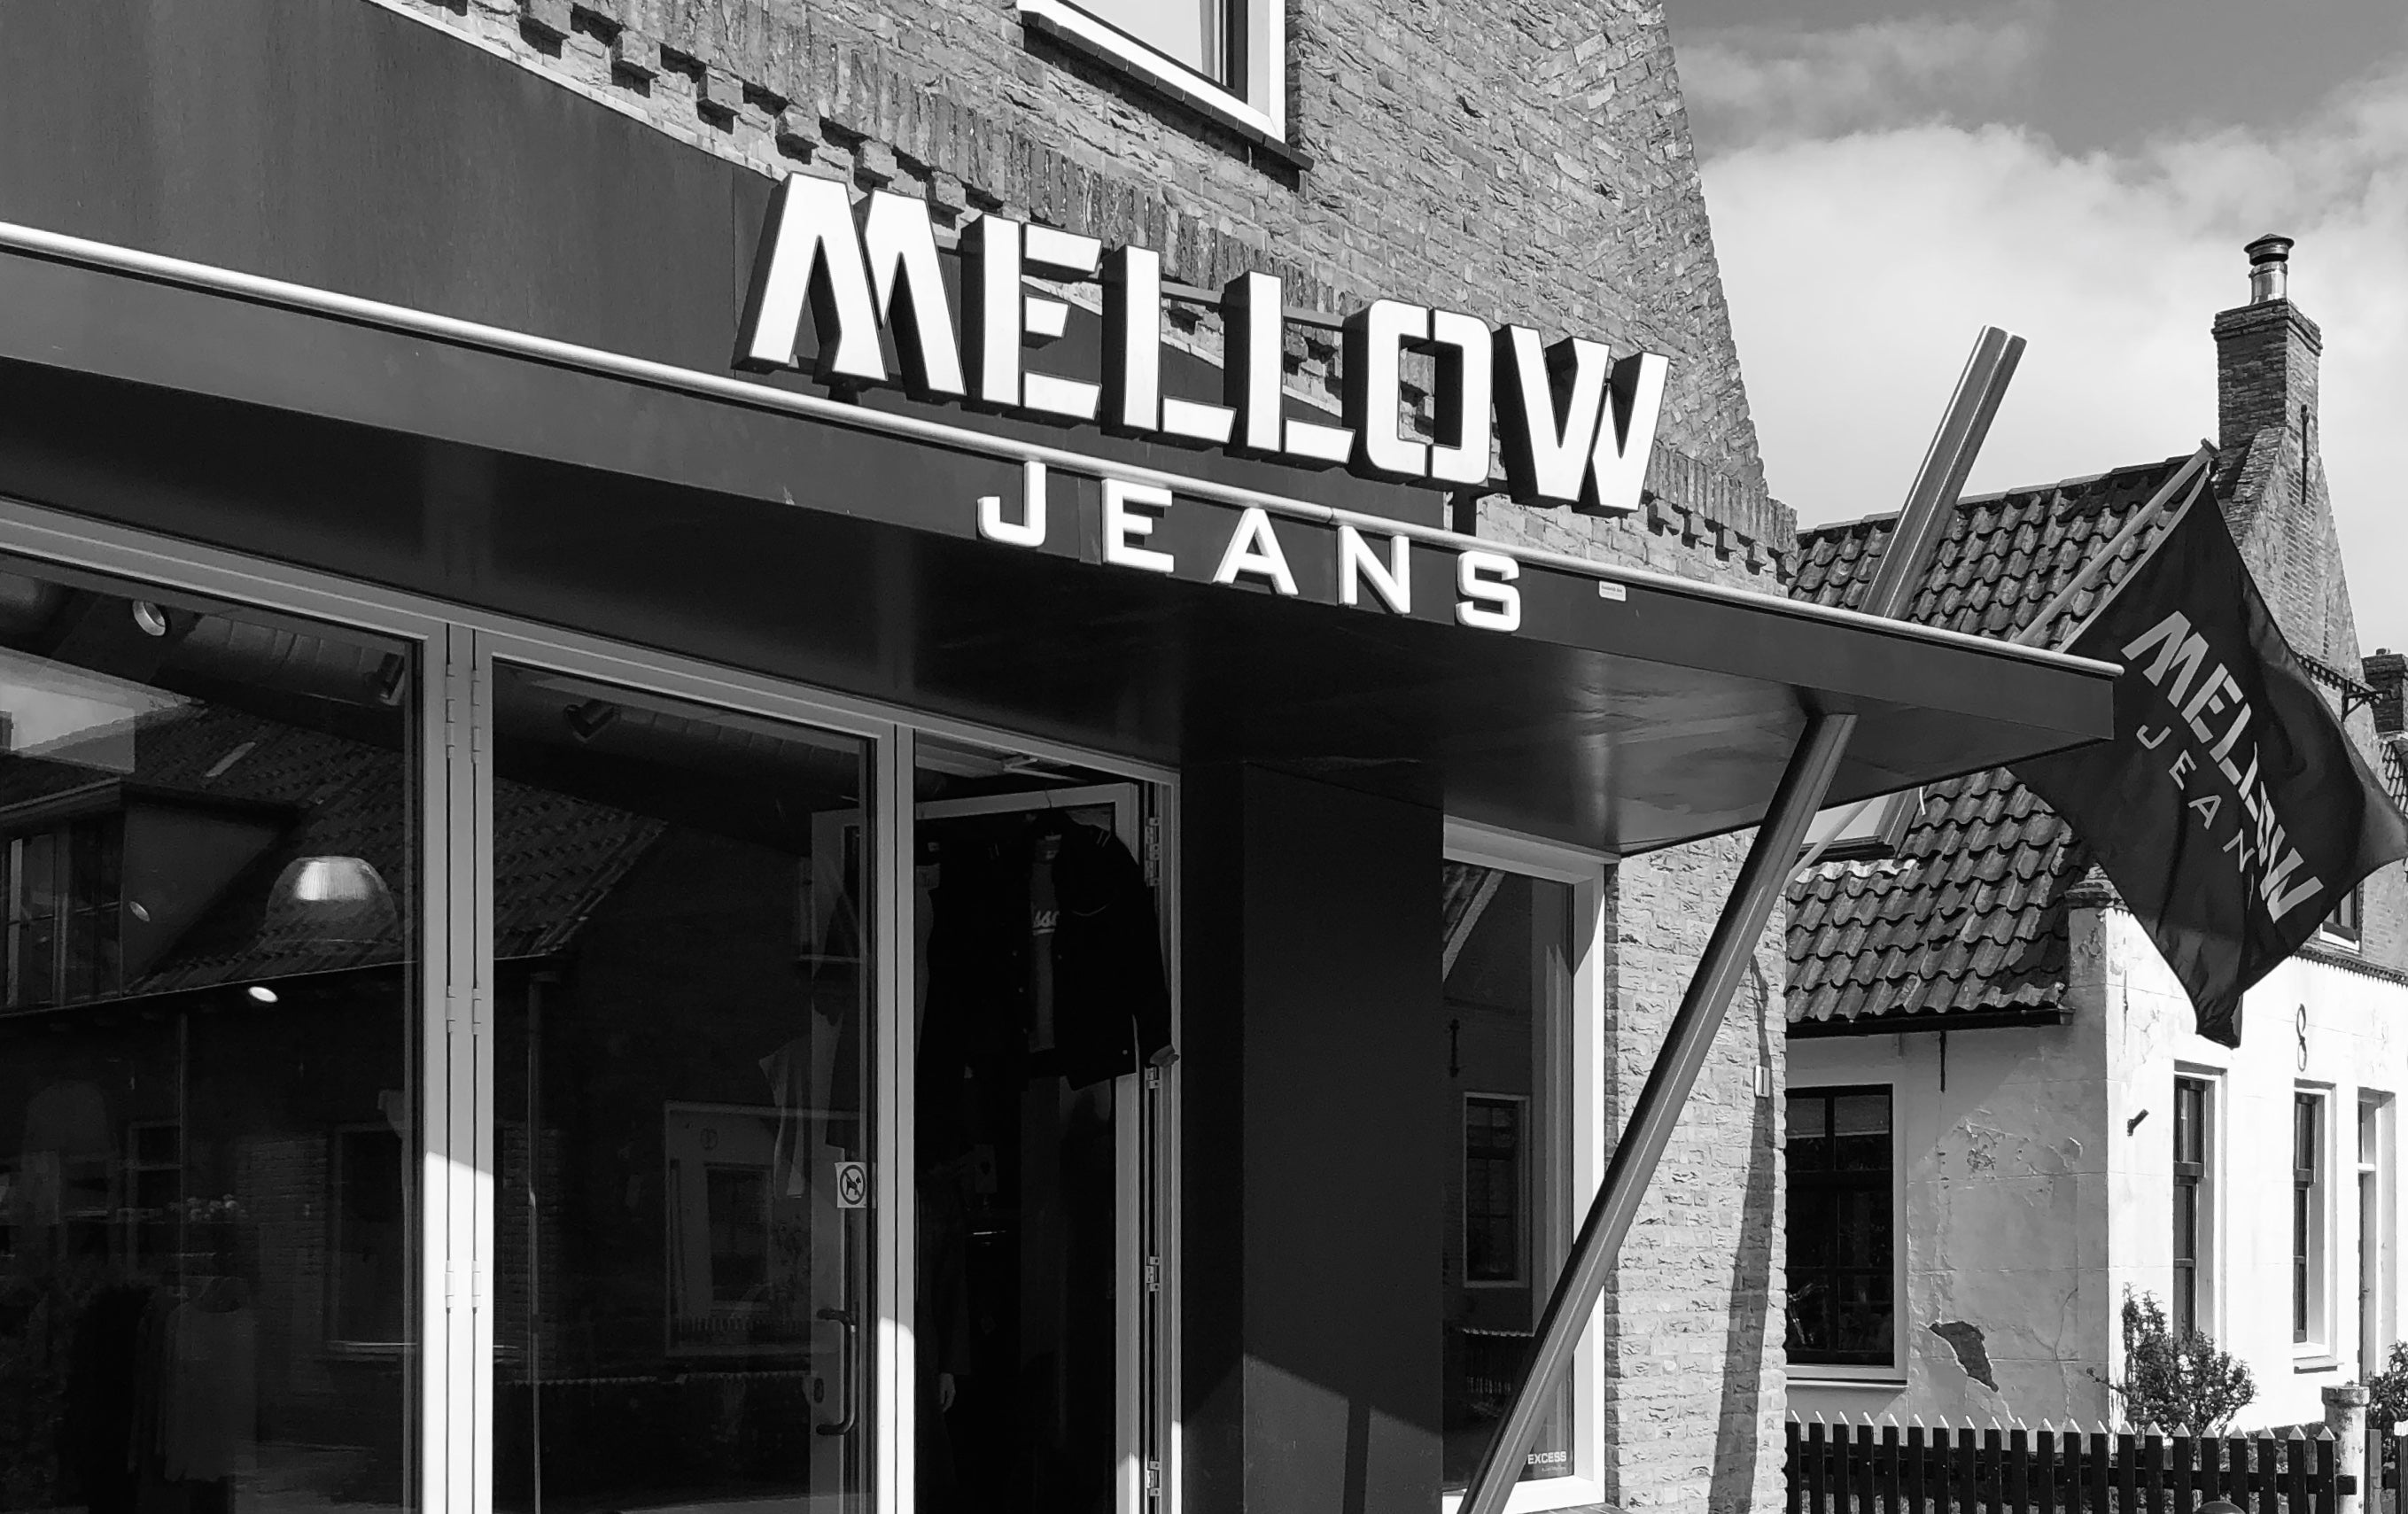 Mellow jeans